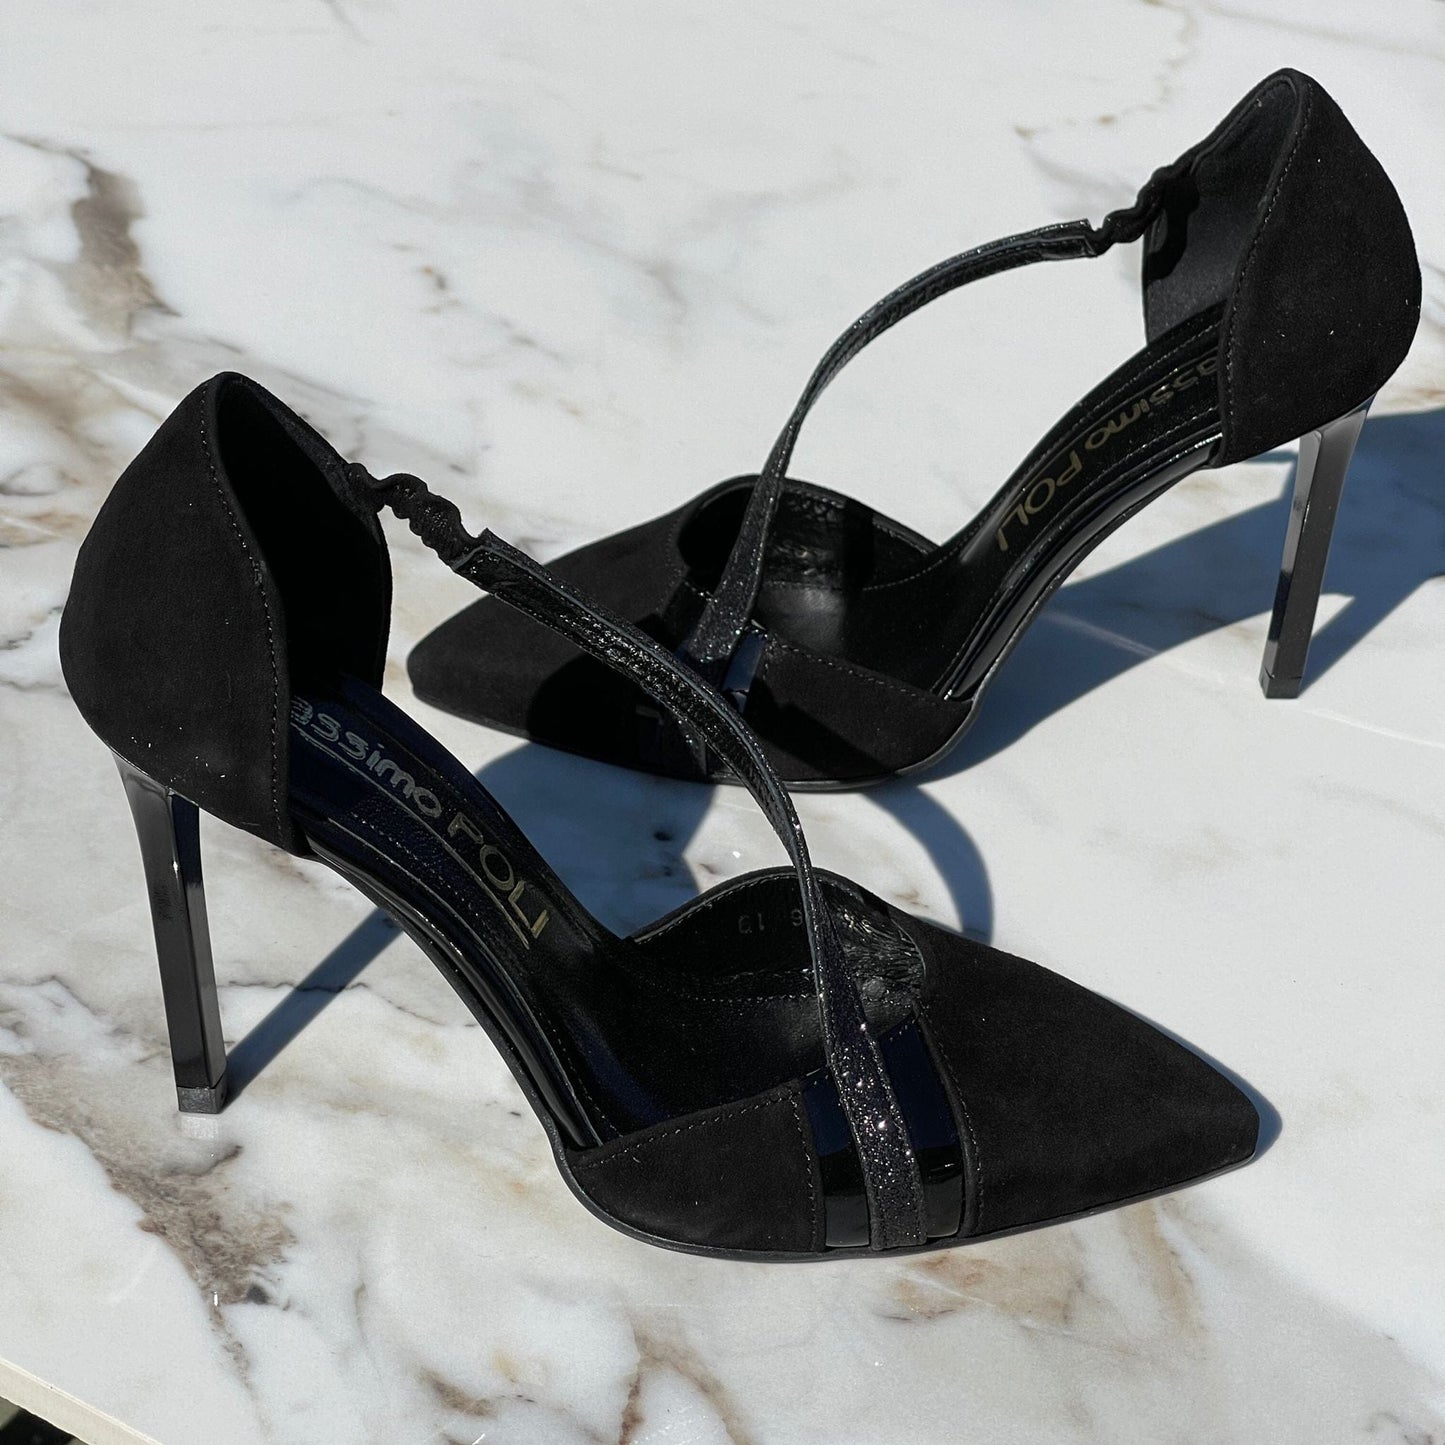 Petite size black suede court heels